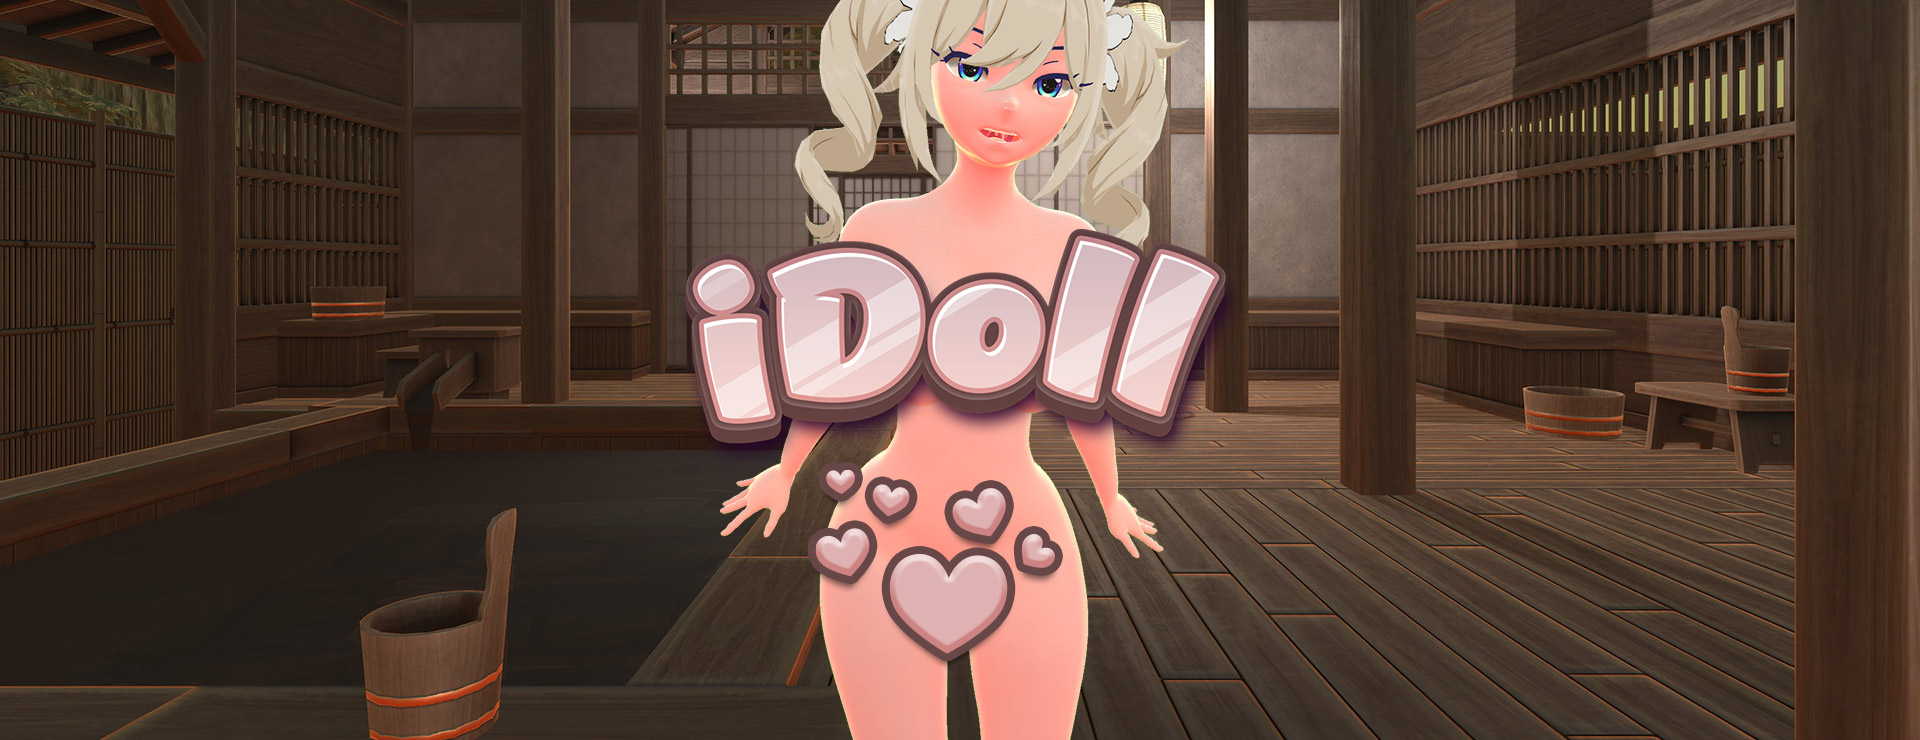 iDoll - シミュレーション ゲーム